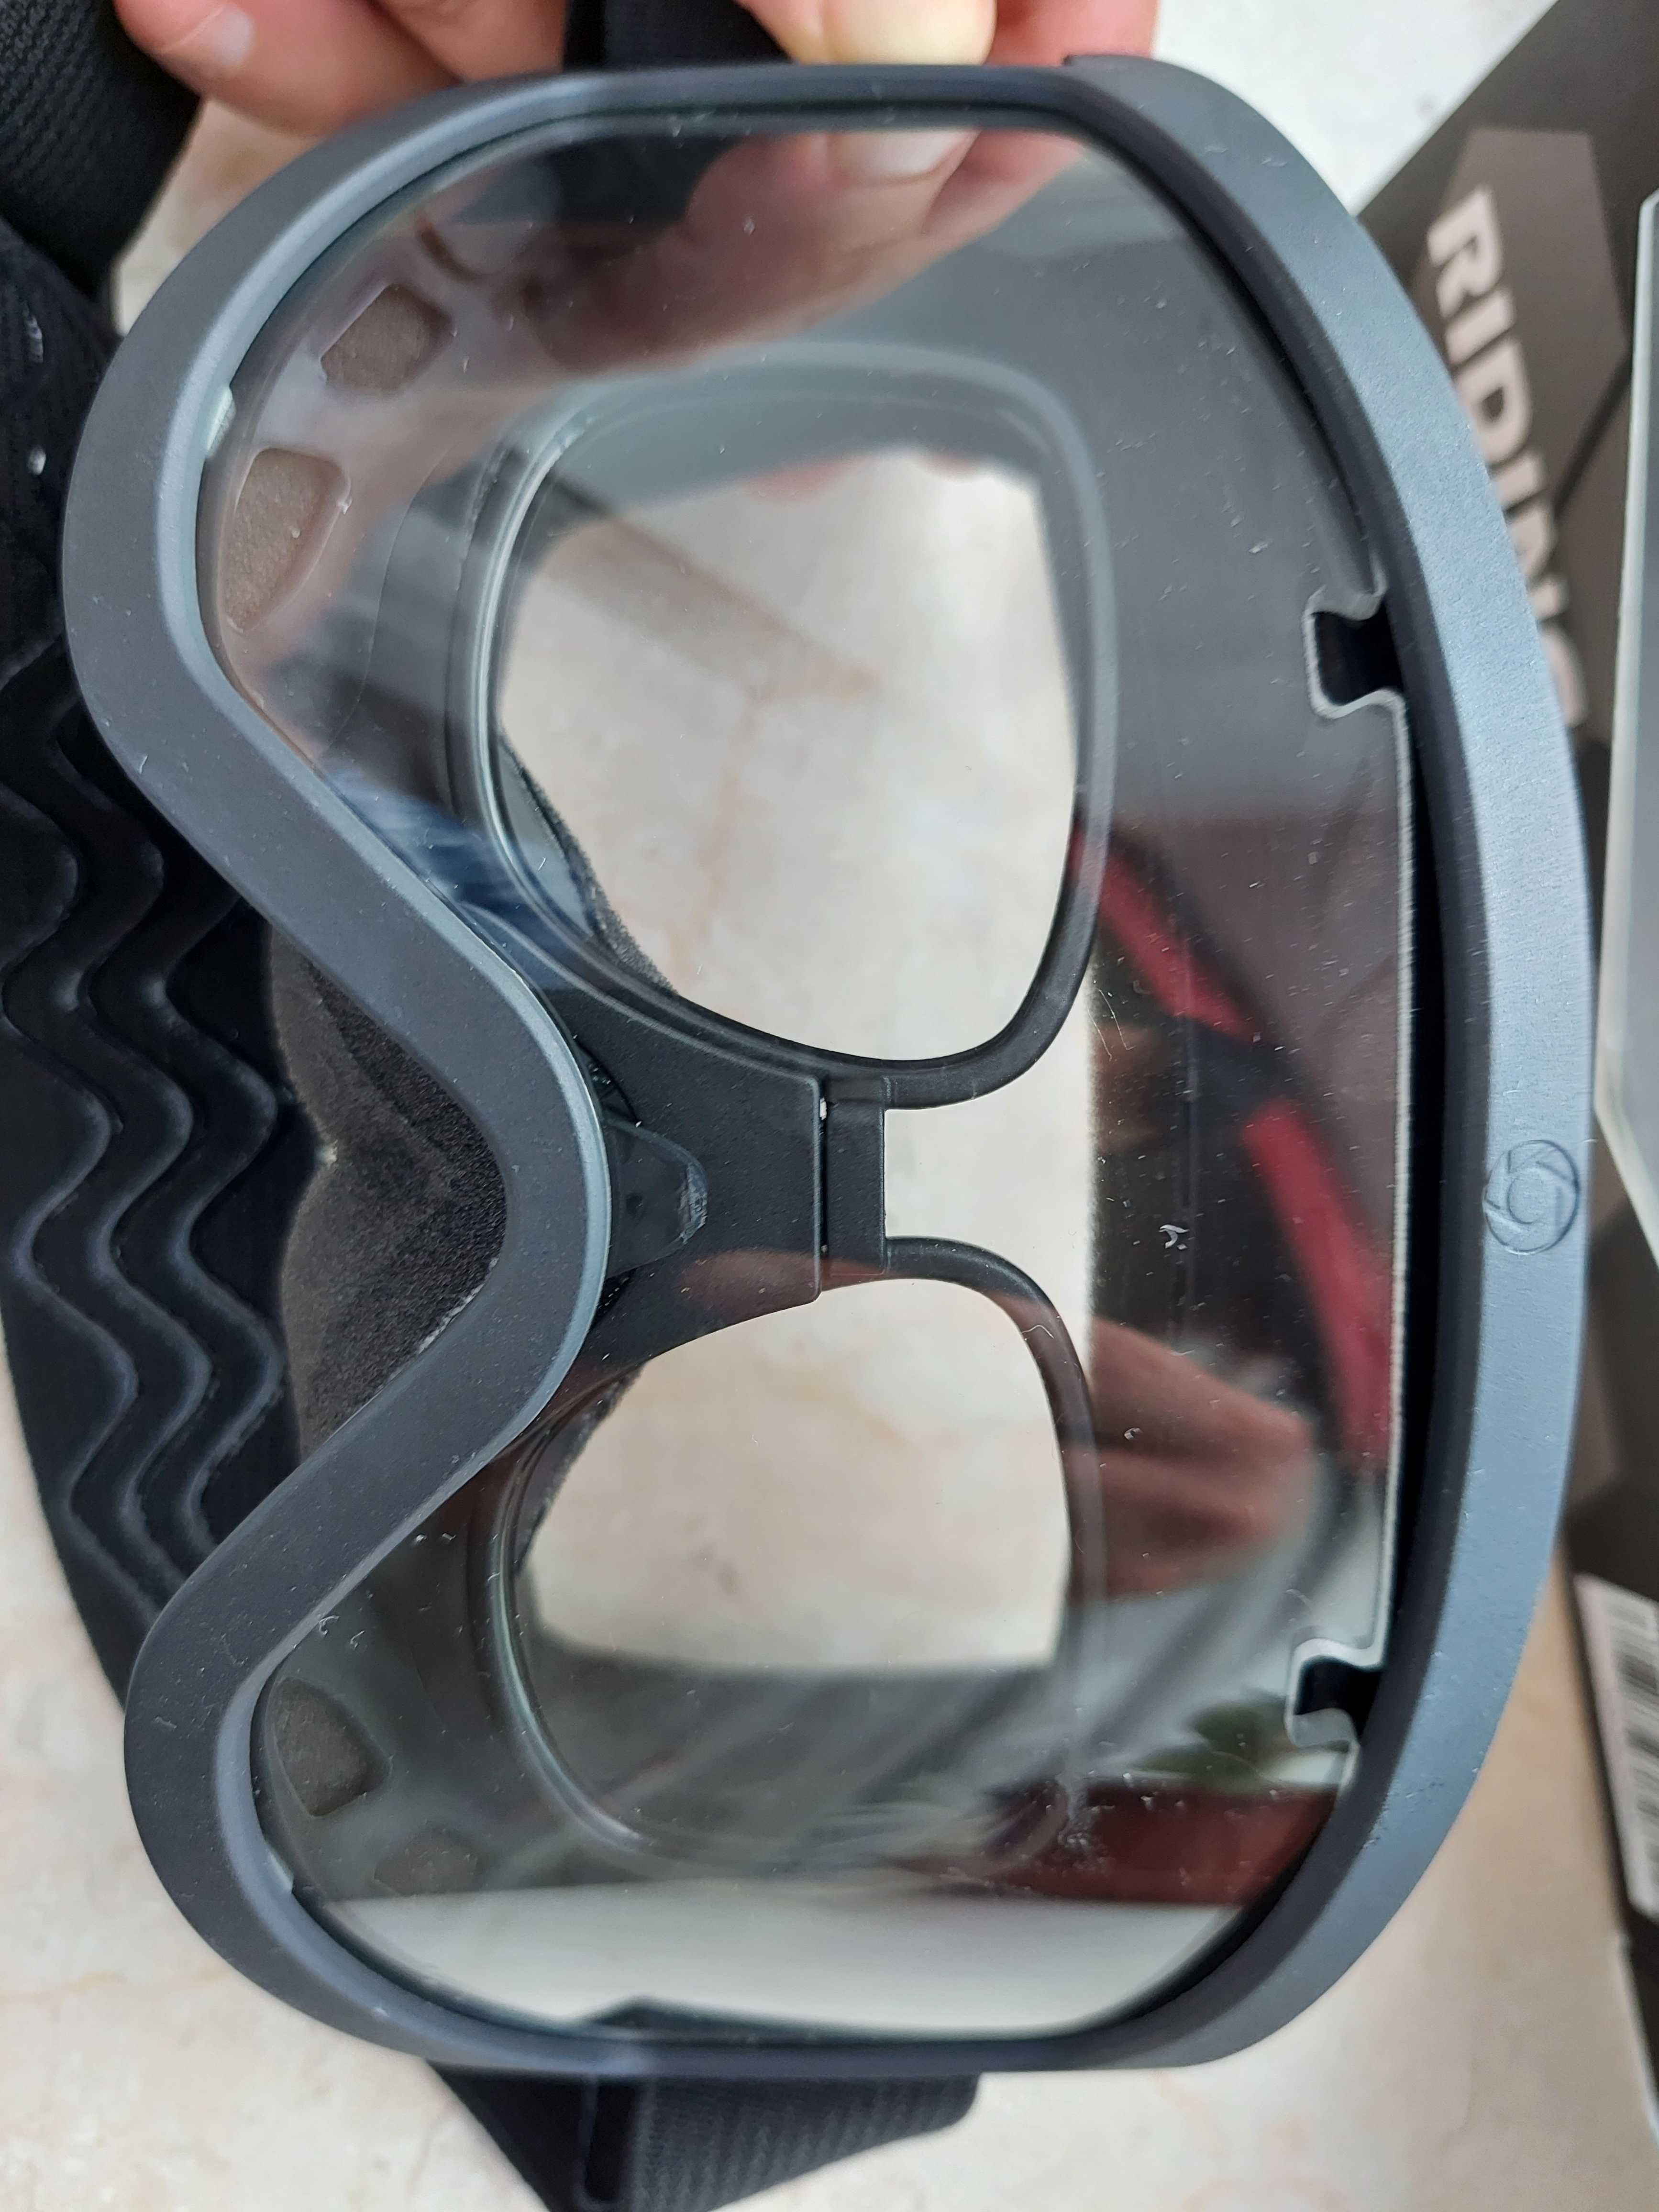 Тактические очки армии США  Pyramex  I-Force и маски